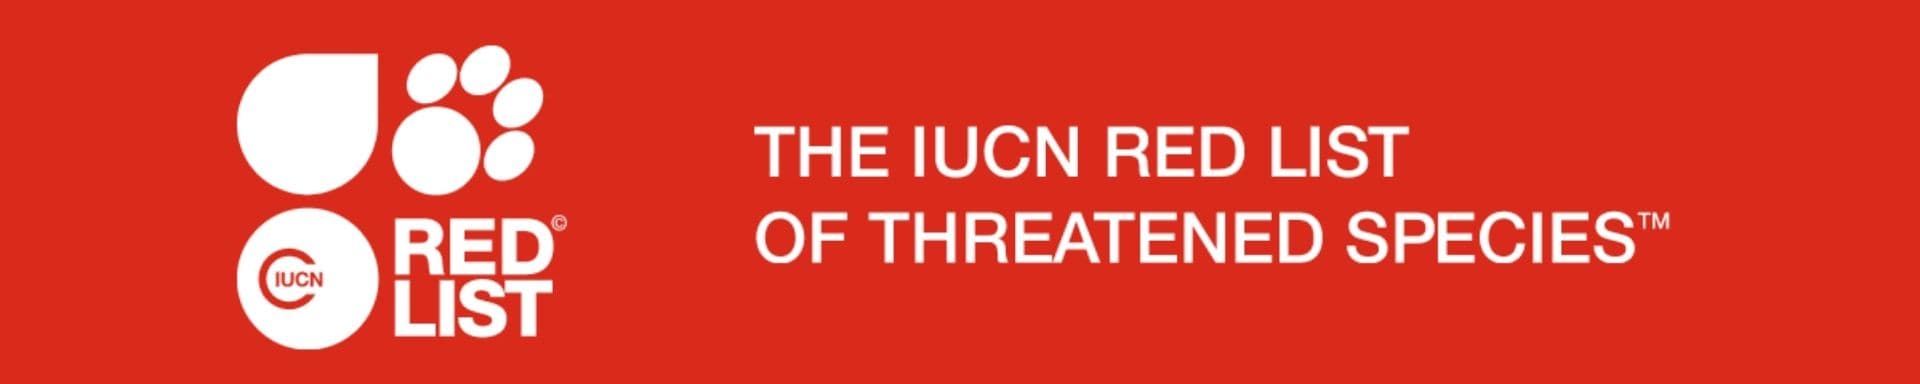 Lista vermelha IUCN